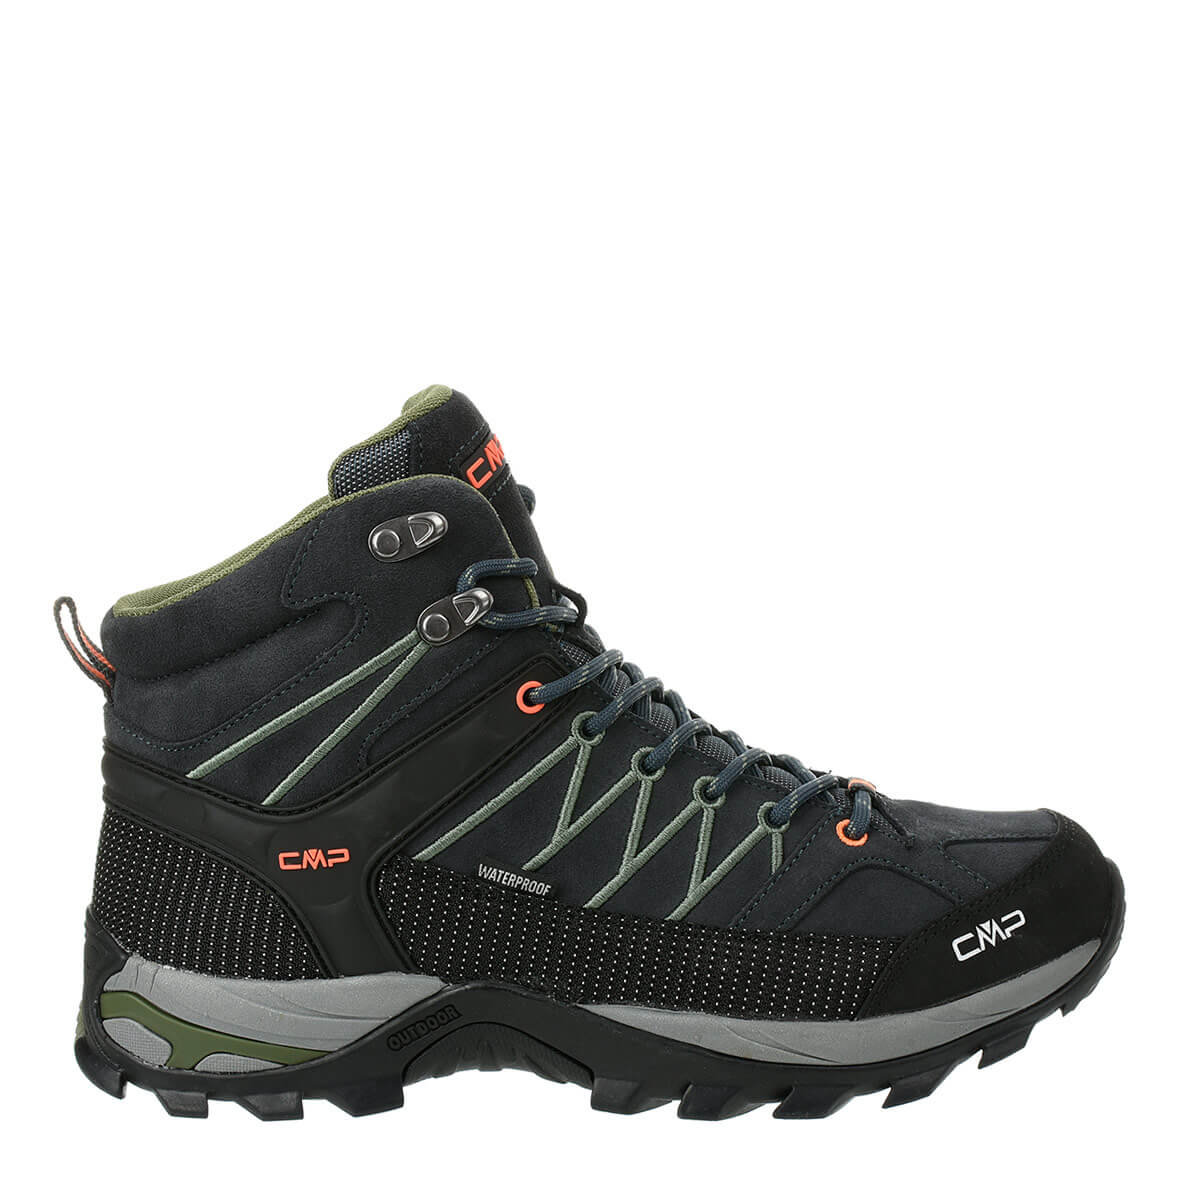 CMP Trekkingi Rigel Mid Trekking Shoe Wp 3Q12947 Granatowy